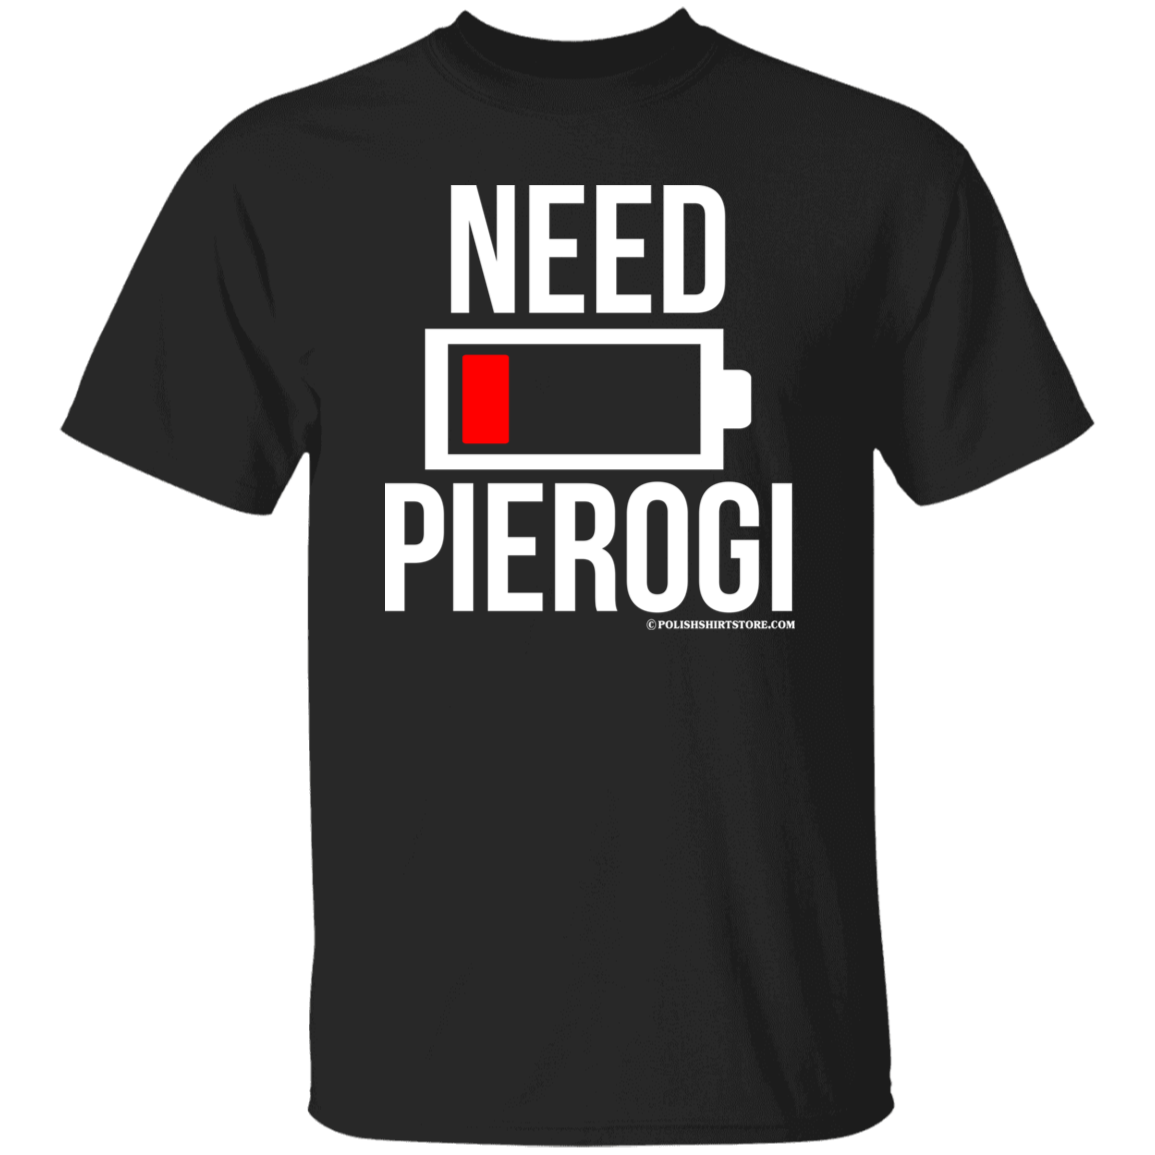 Need Pierogi Battery Low Apparel CustomCat G500 5.3 oz. T-Shirt Black S